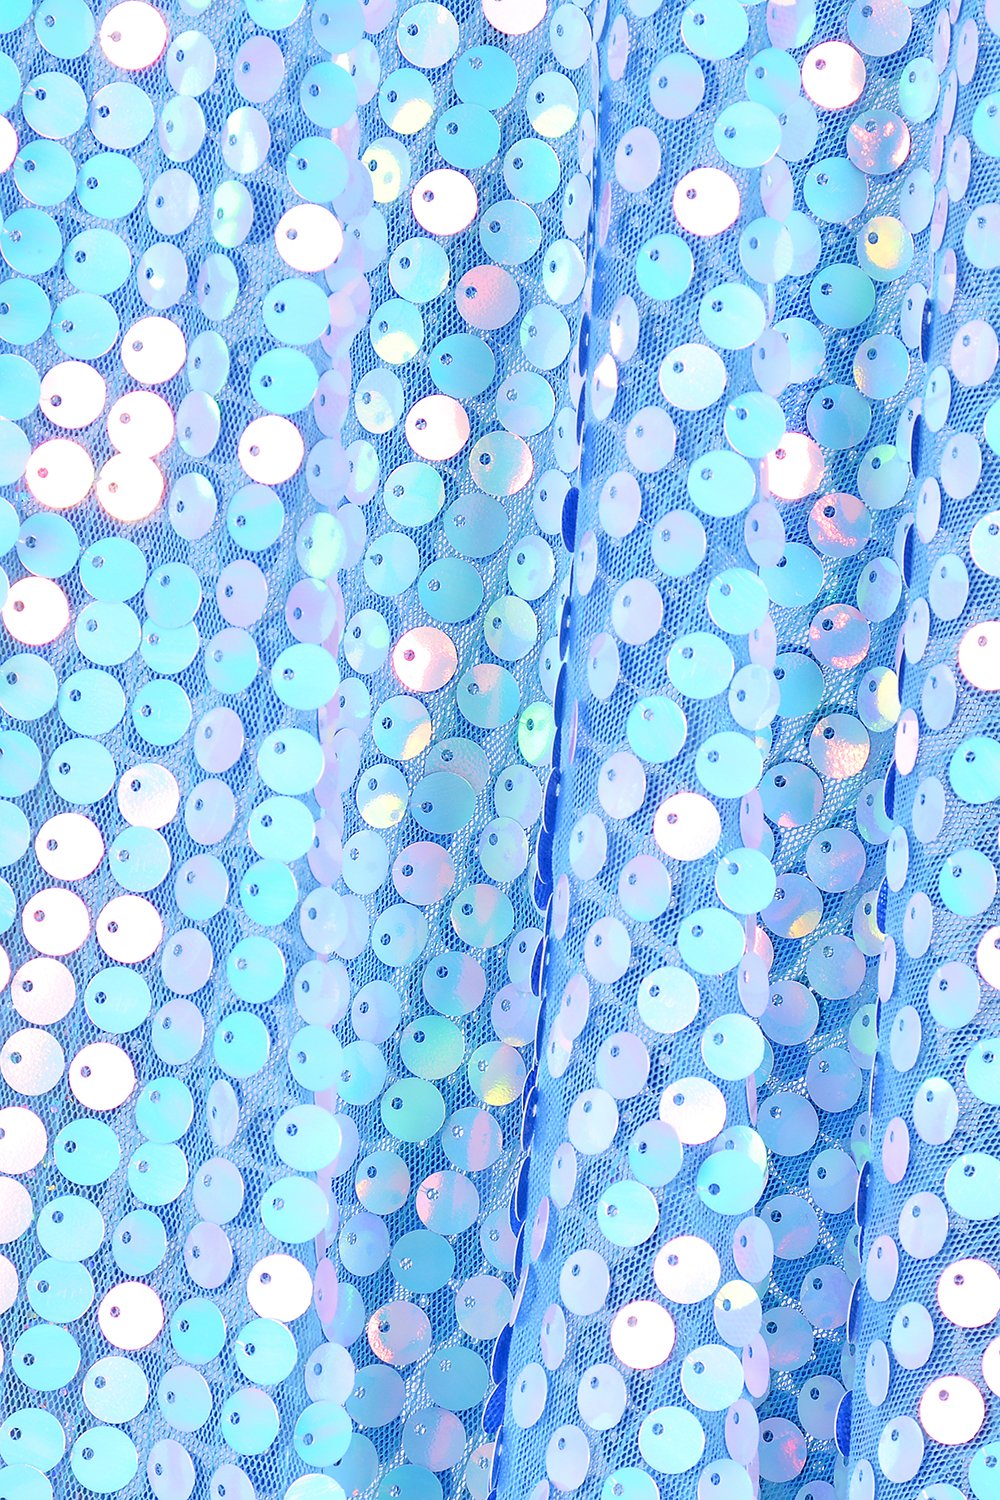 Disco Sequin Tassel Kimono - Pixie Blue